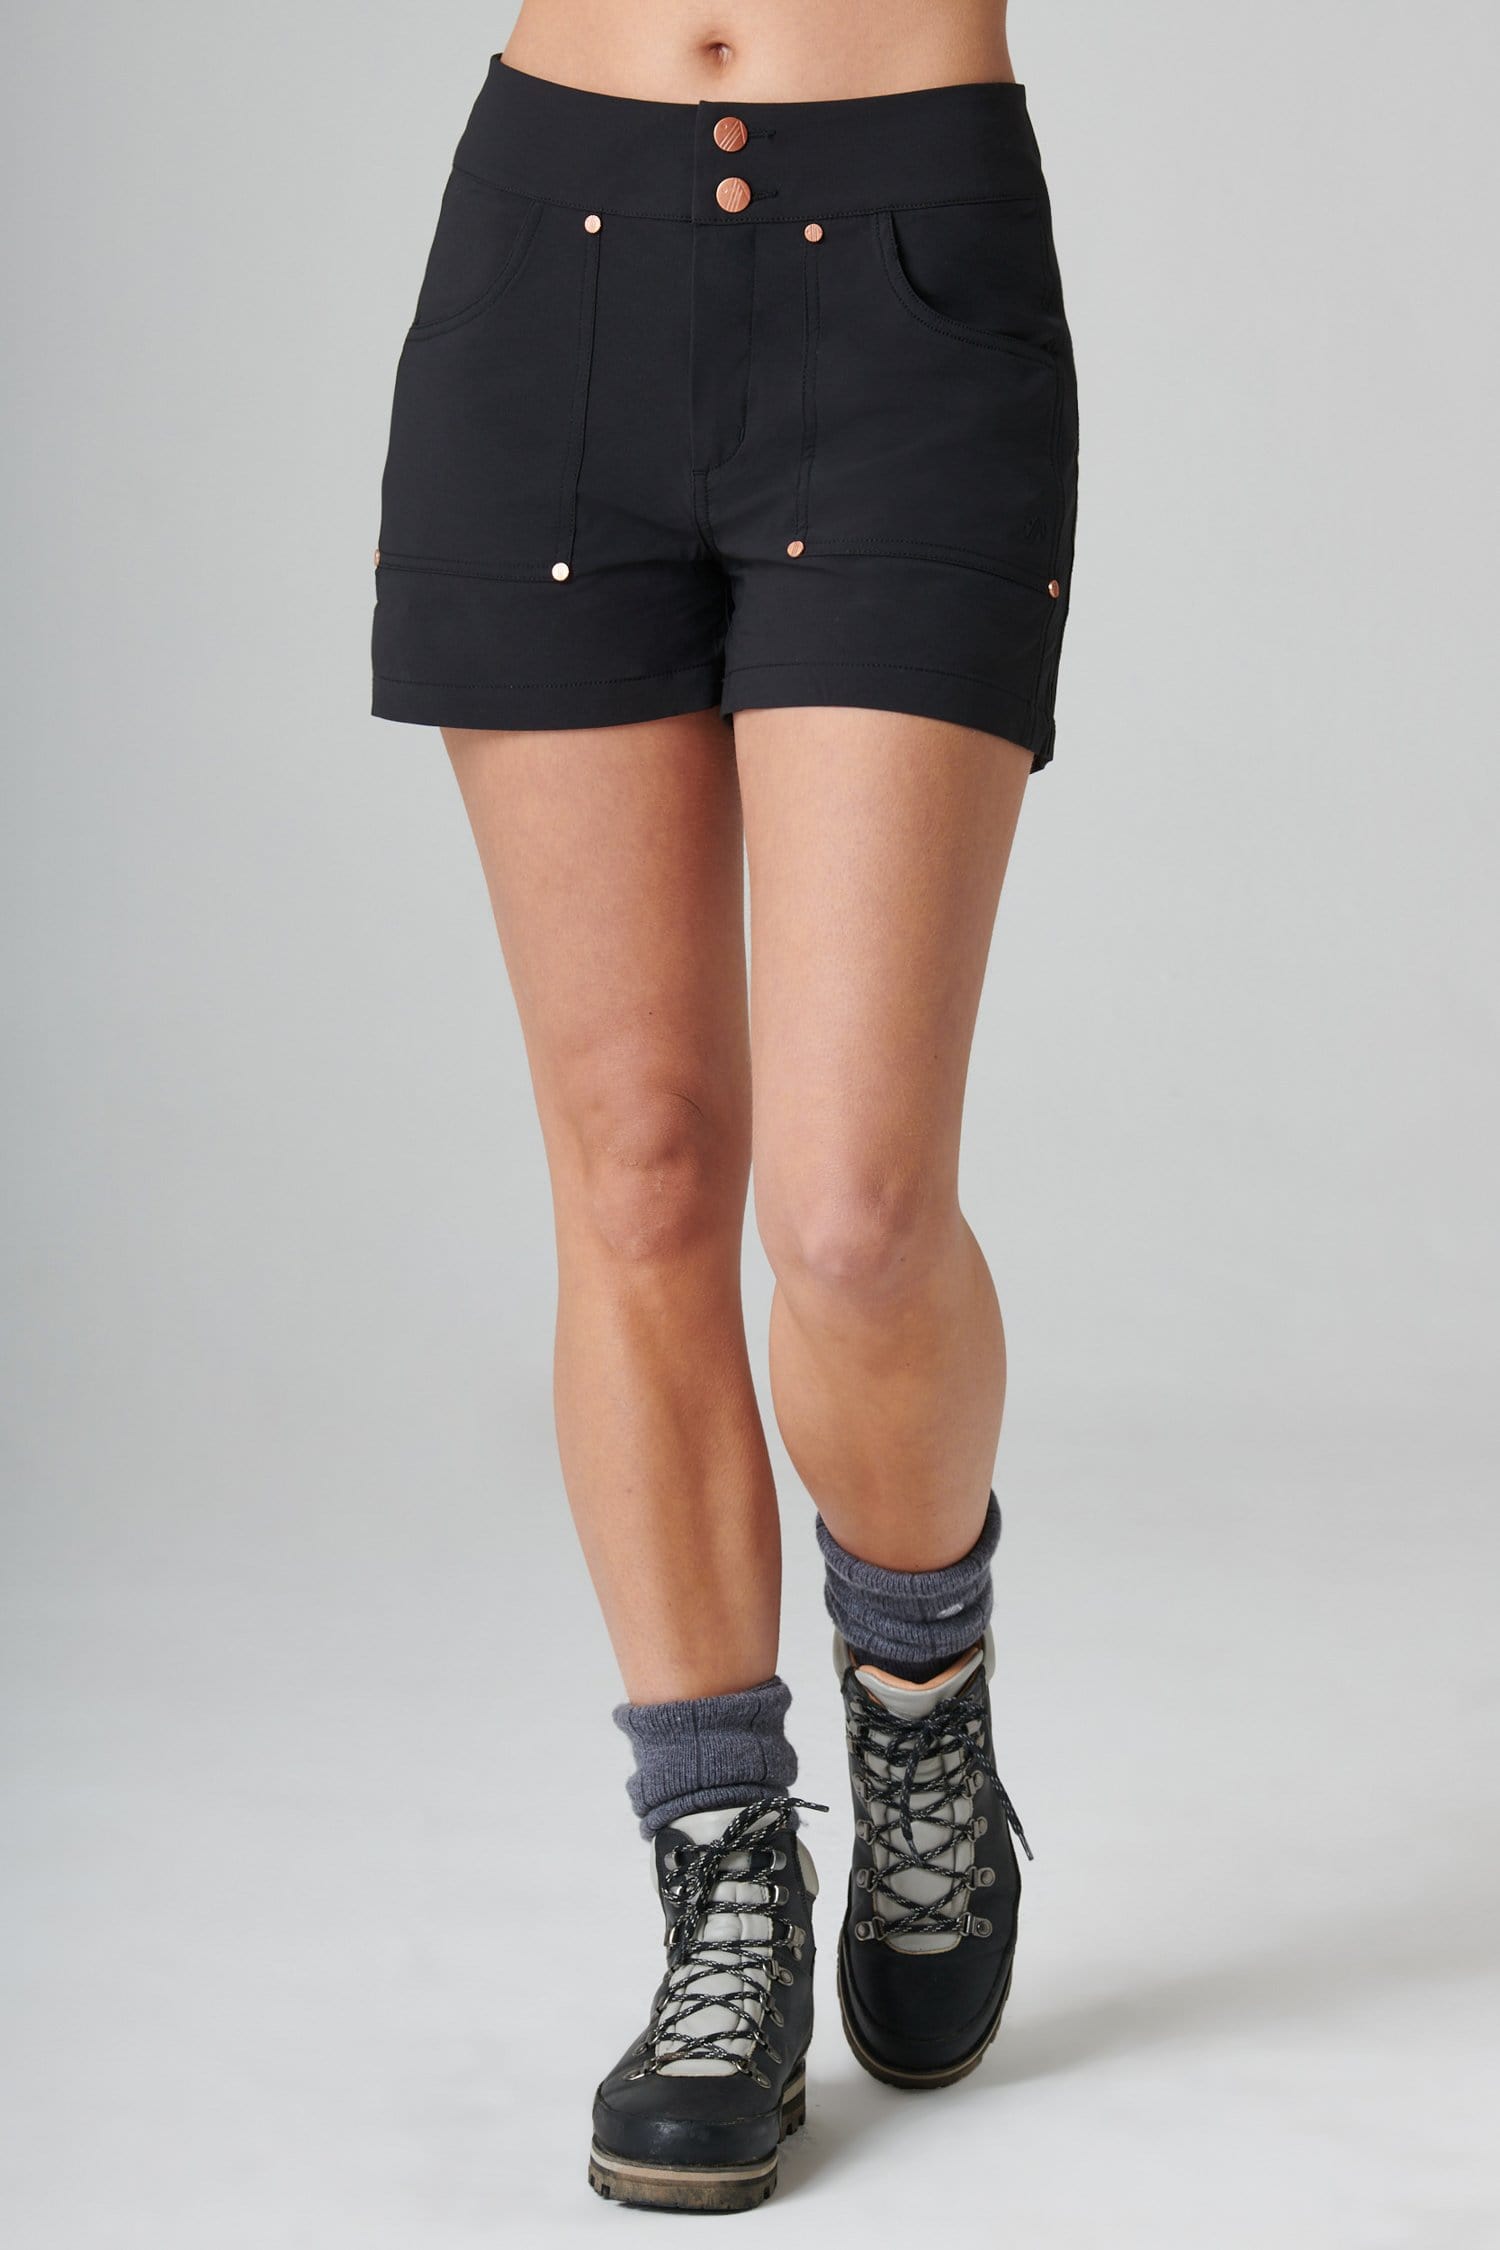 Trek Shorts - Black - 24 / Uk6 - Womens - Acai Outdoorwear